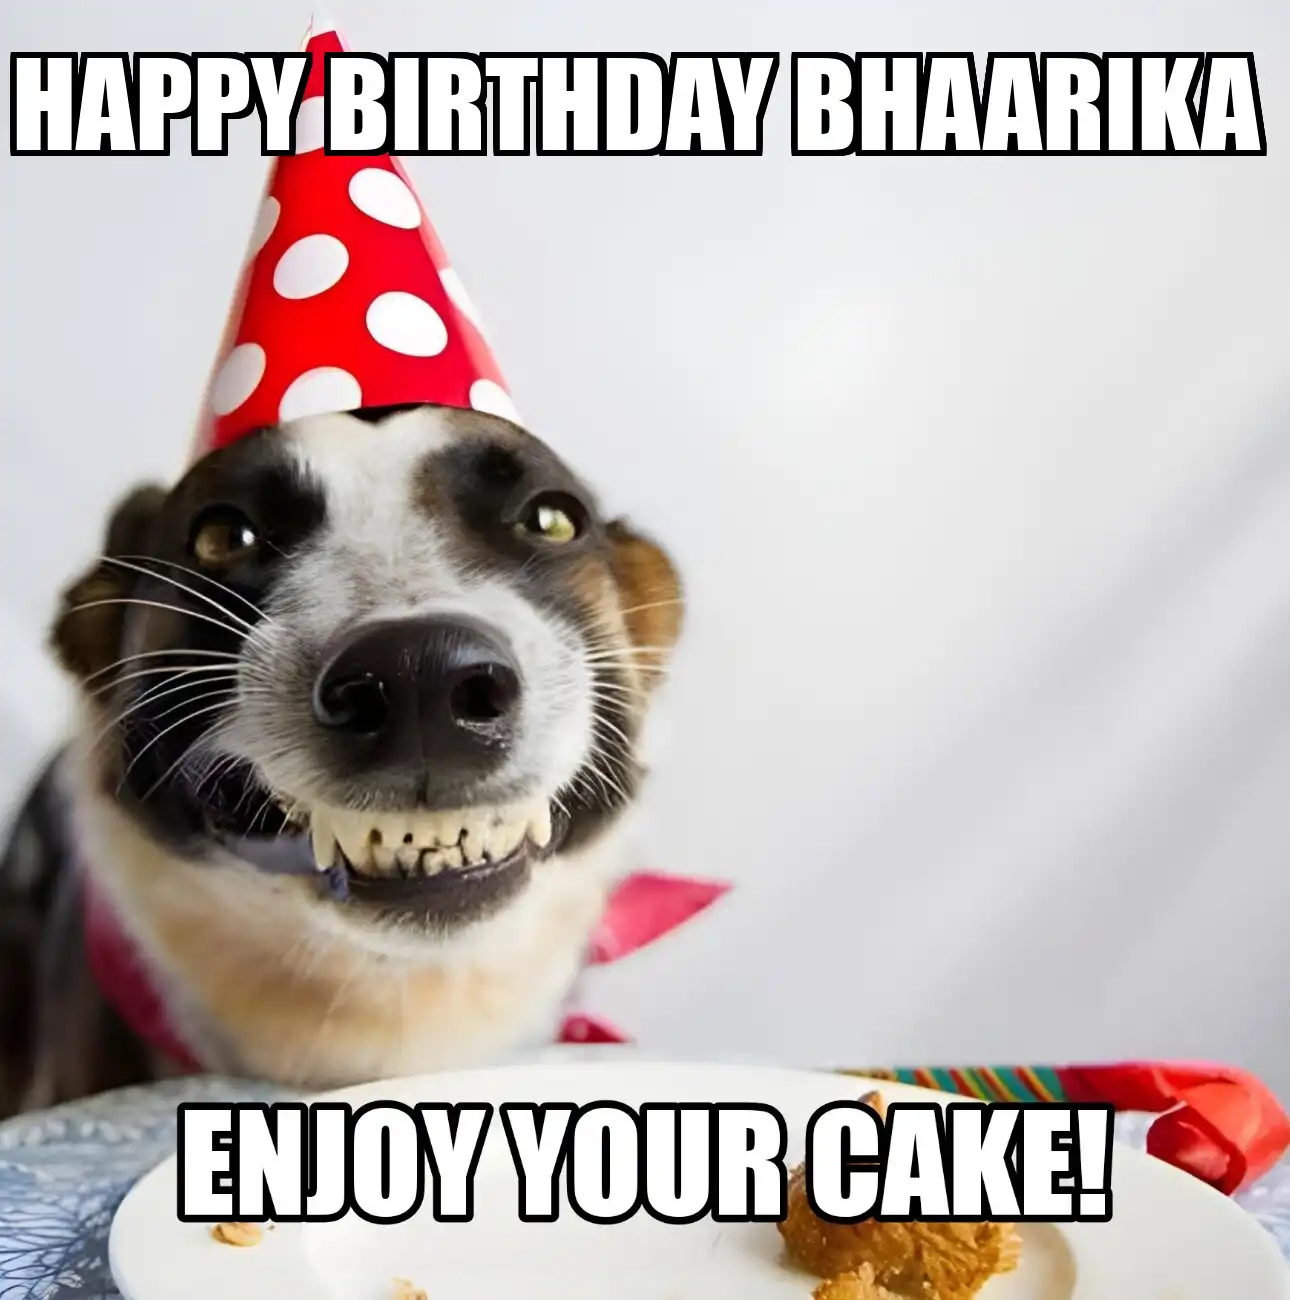 Happy Birthday Bhaarika Enjoy Your Cake Dog Meme